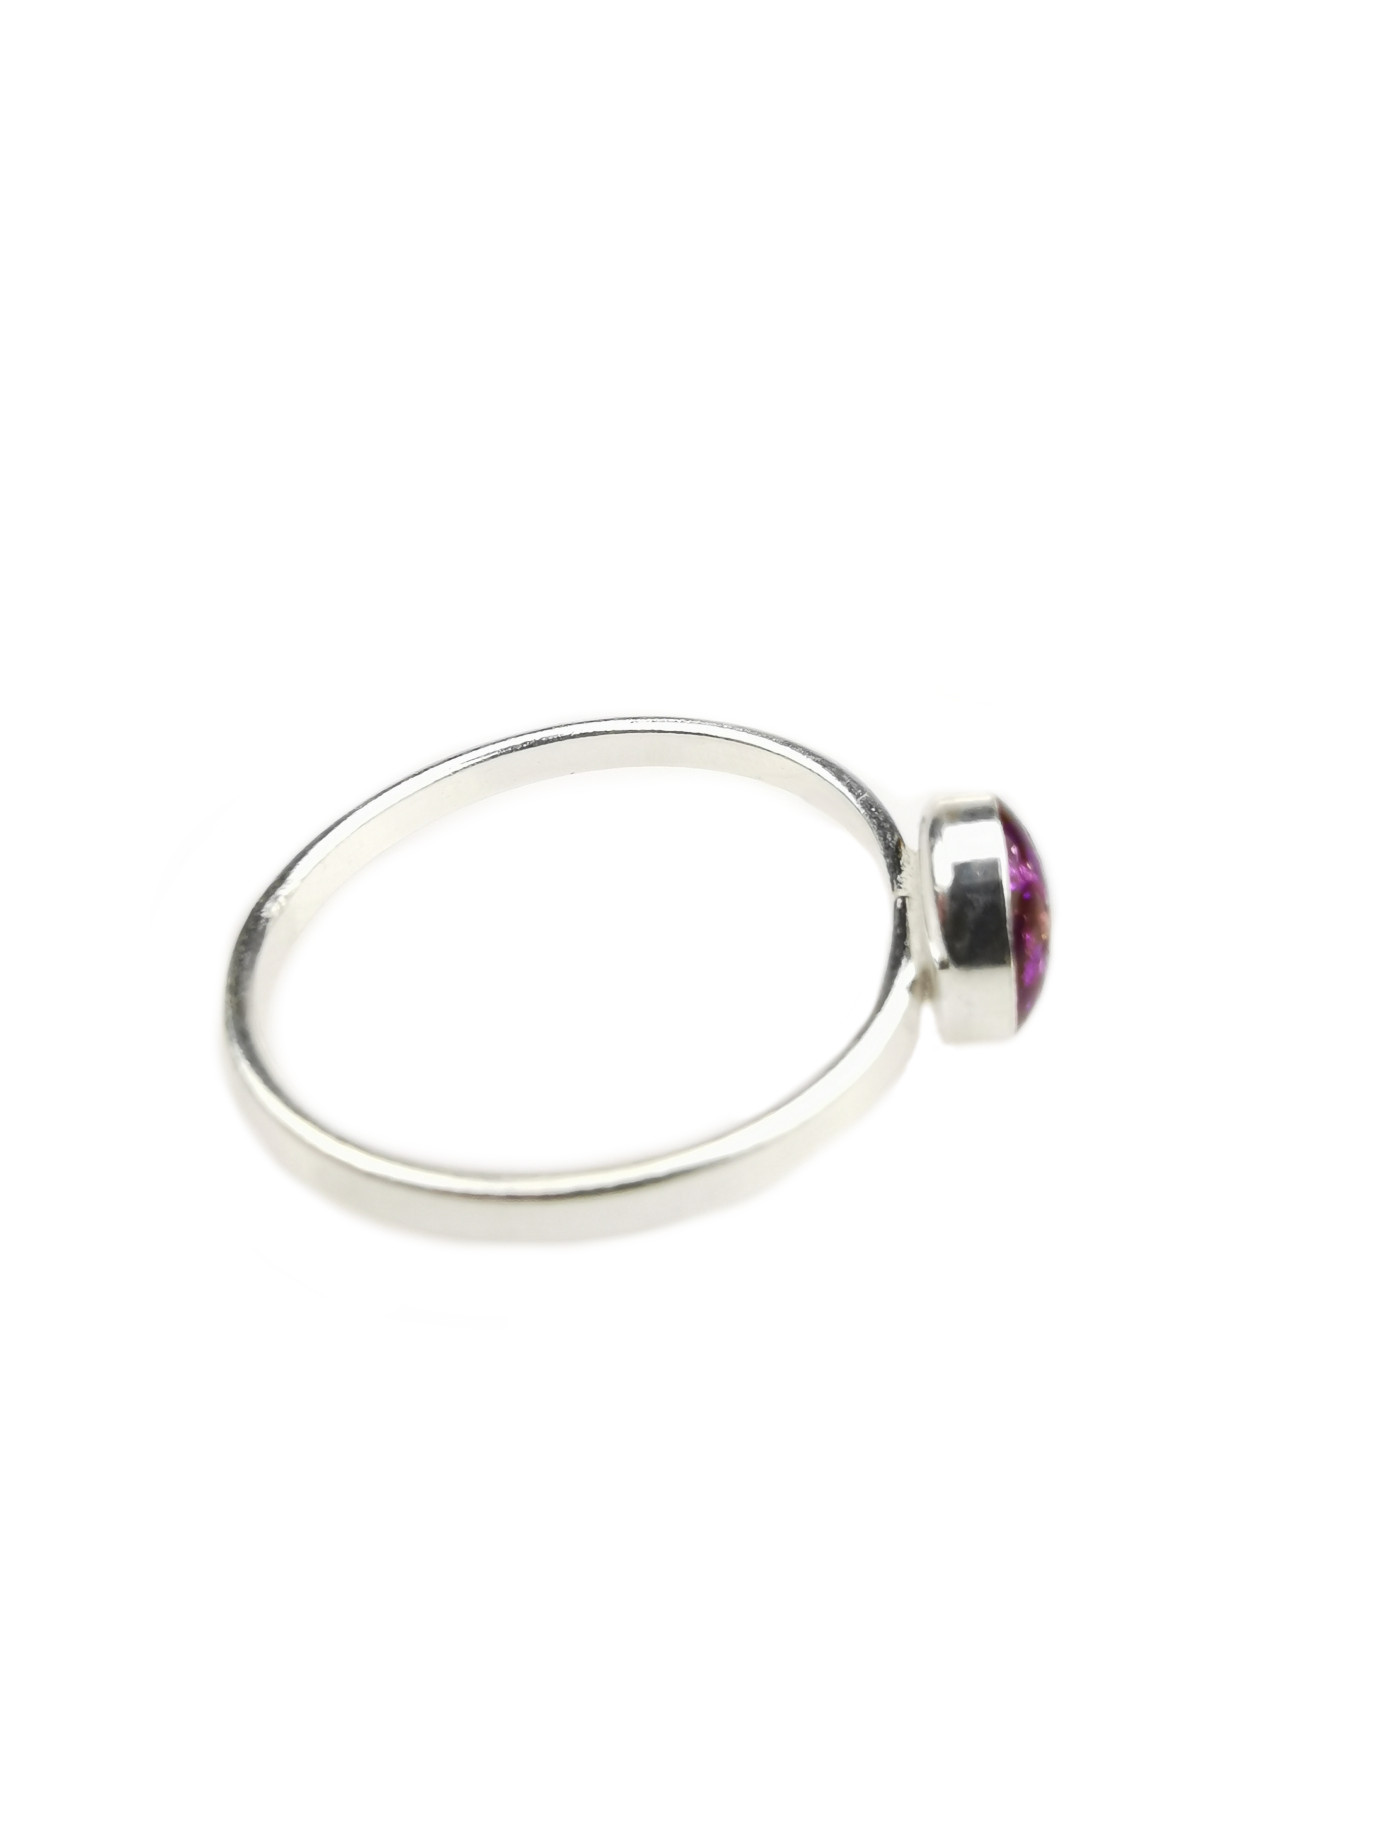 Large Violet Orgone Crystal Ring by OrgoneVibes